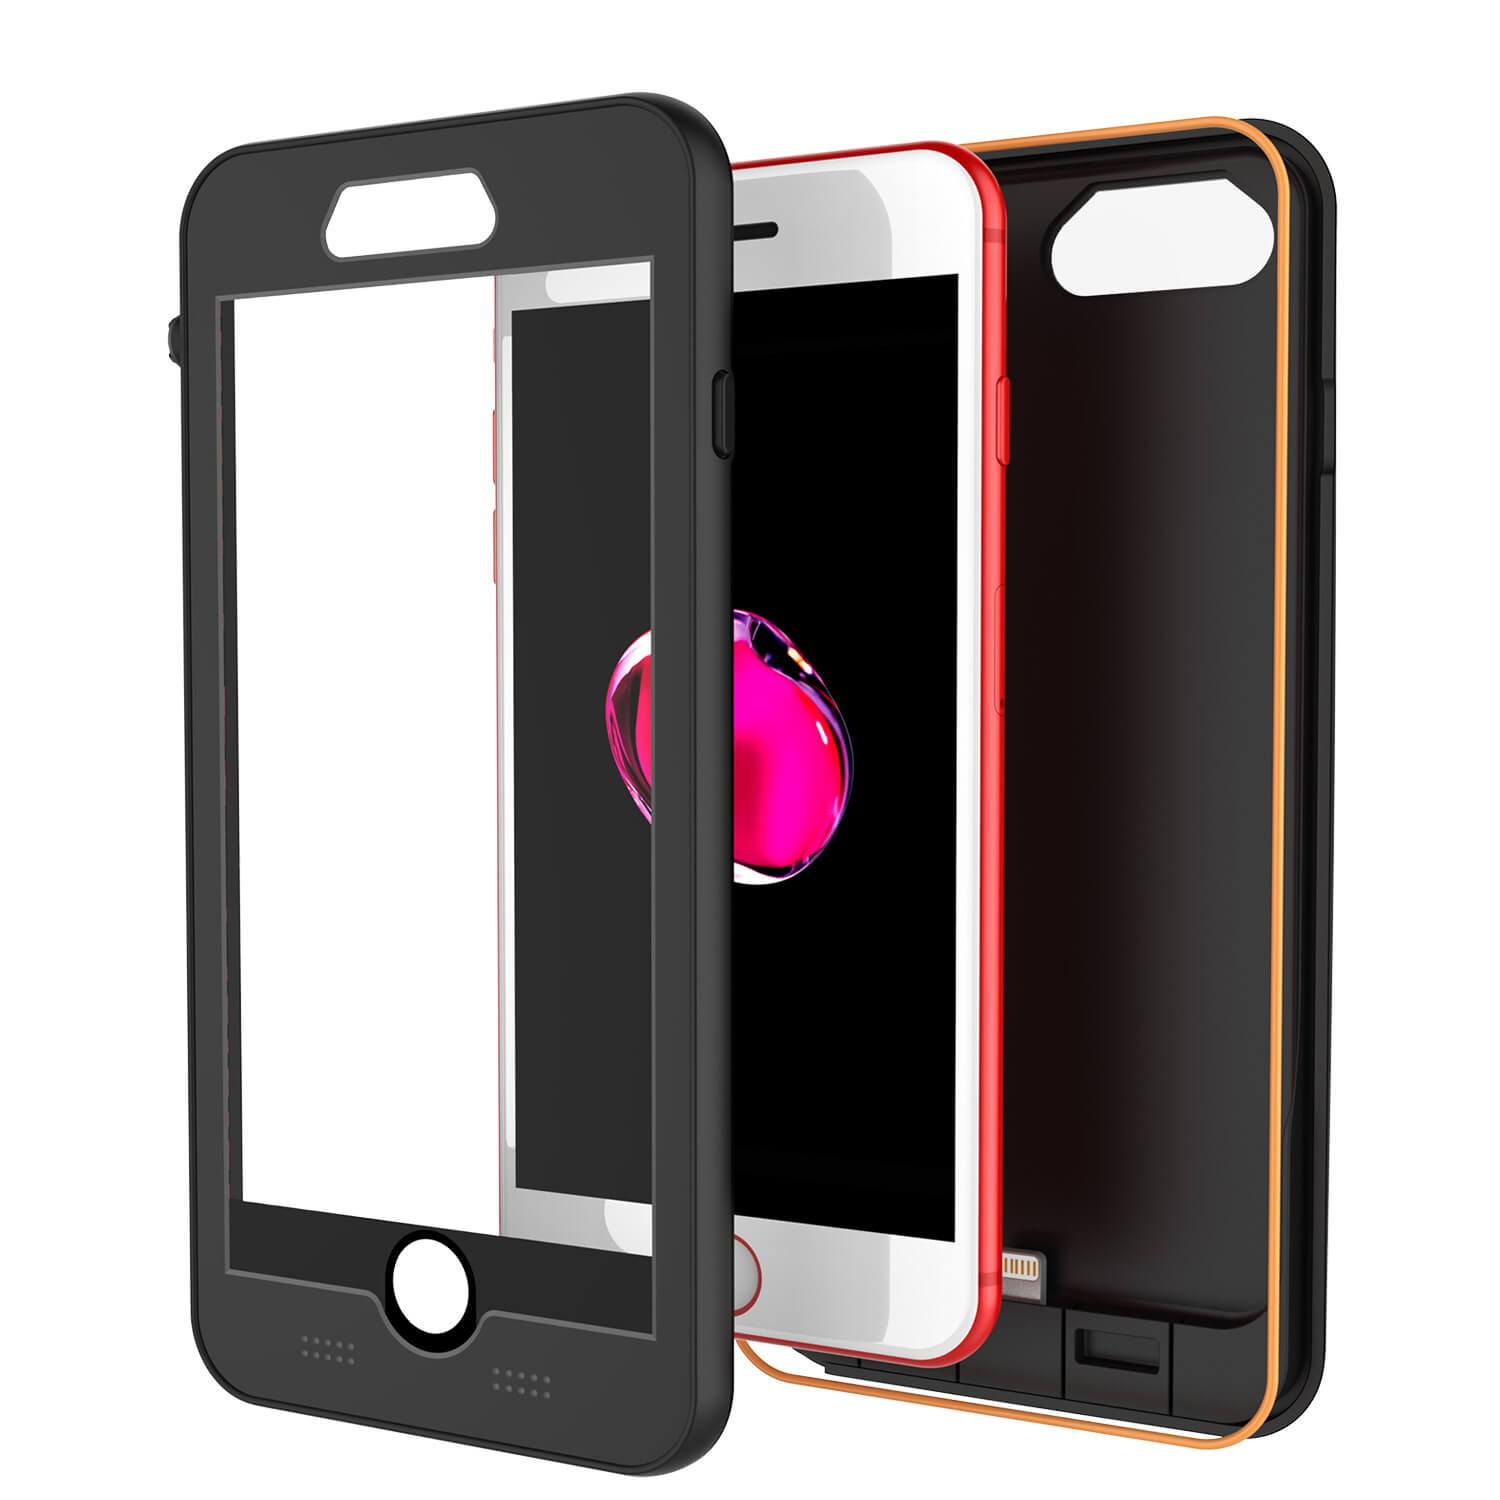 PunkJuice iPhone 6+ Plus/6s+ Plus Battery Case Black - Waterproof Power Juice Bank w/ 4300mAh